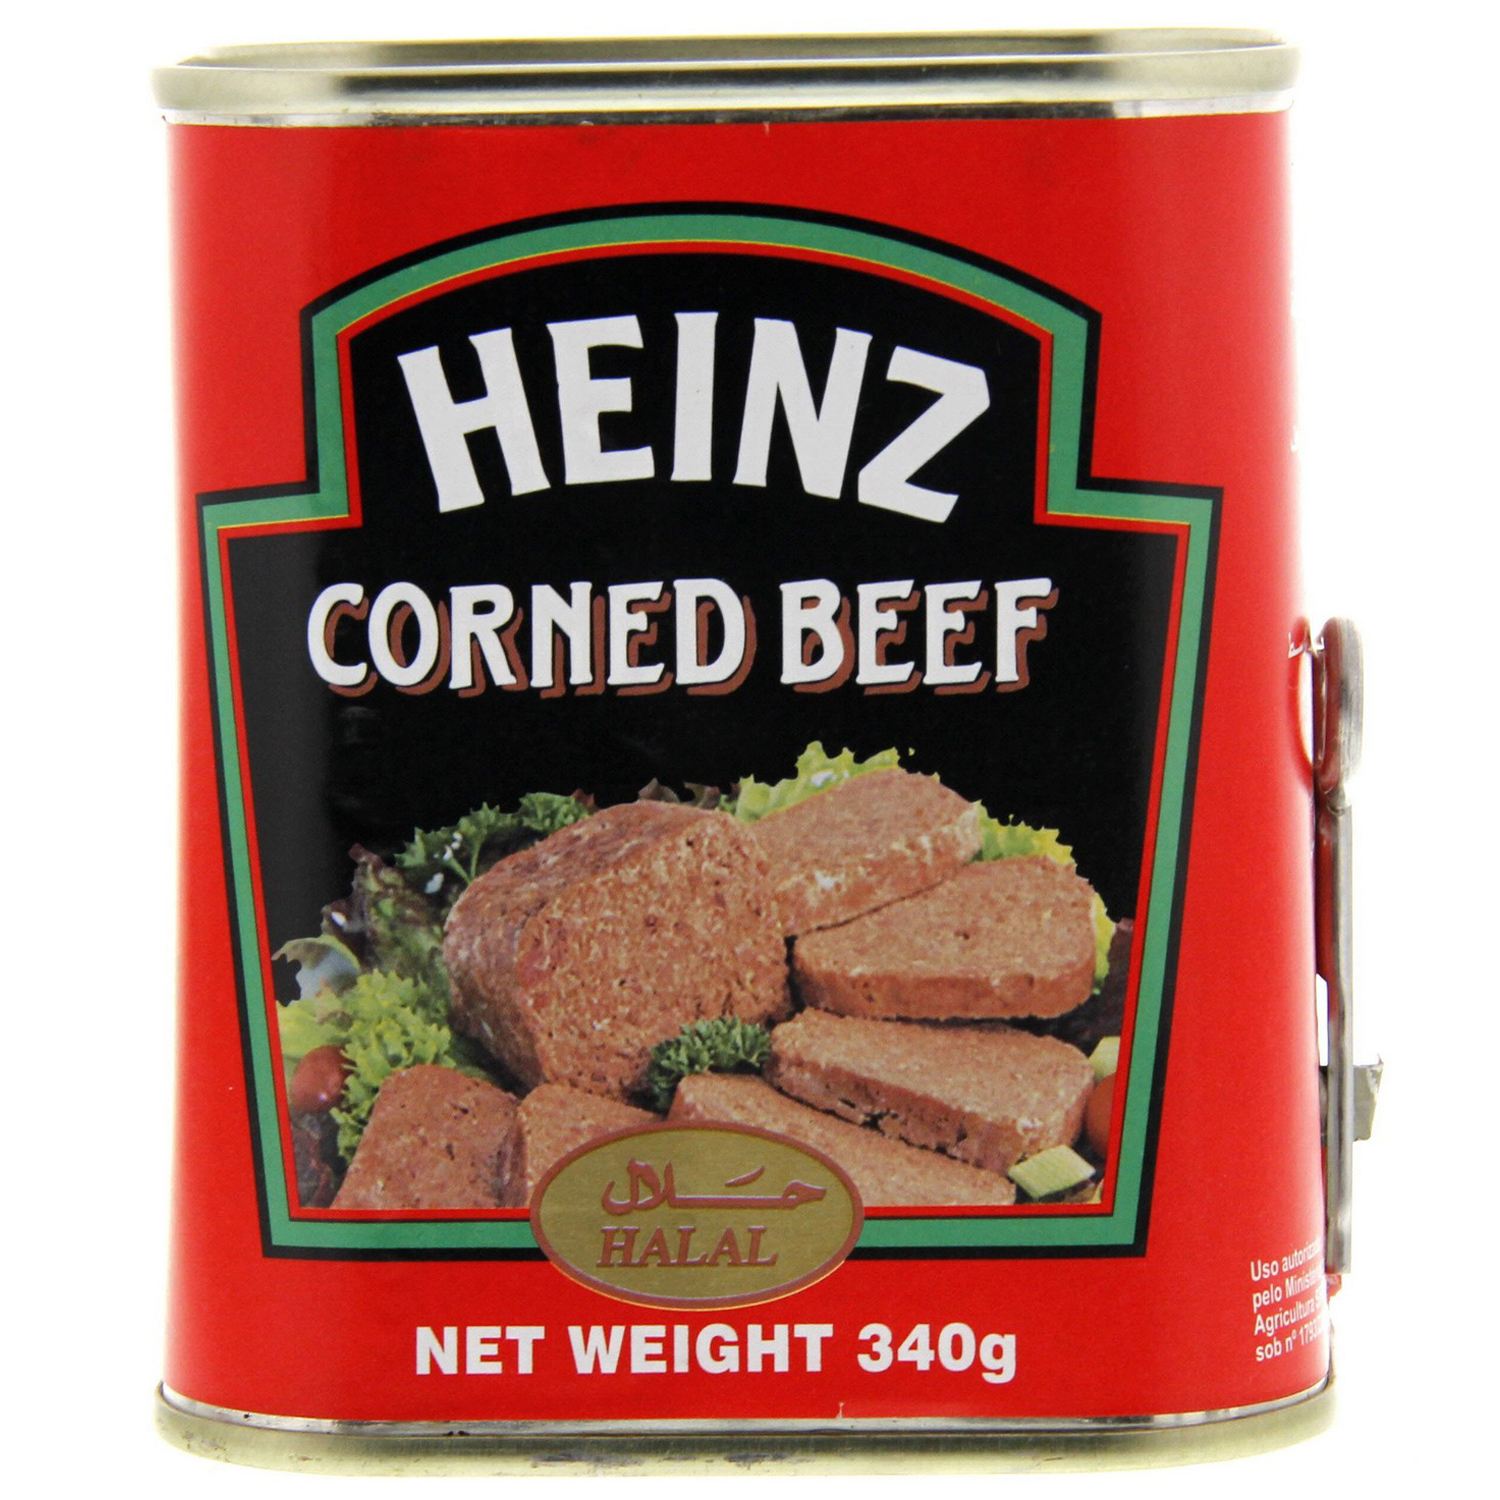 10.50. You're viewing: Heinz Corned Beef 340 gm. 